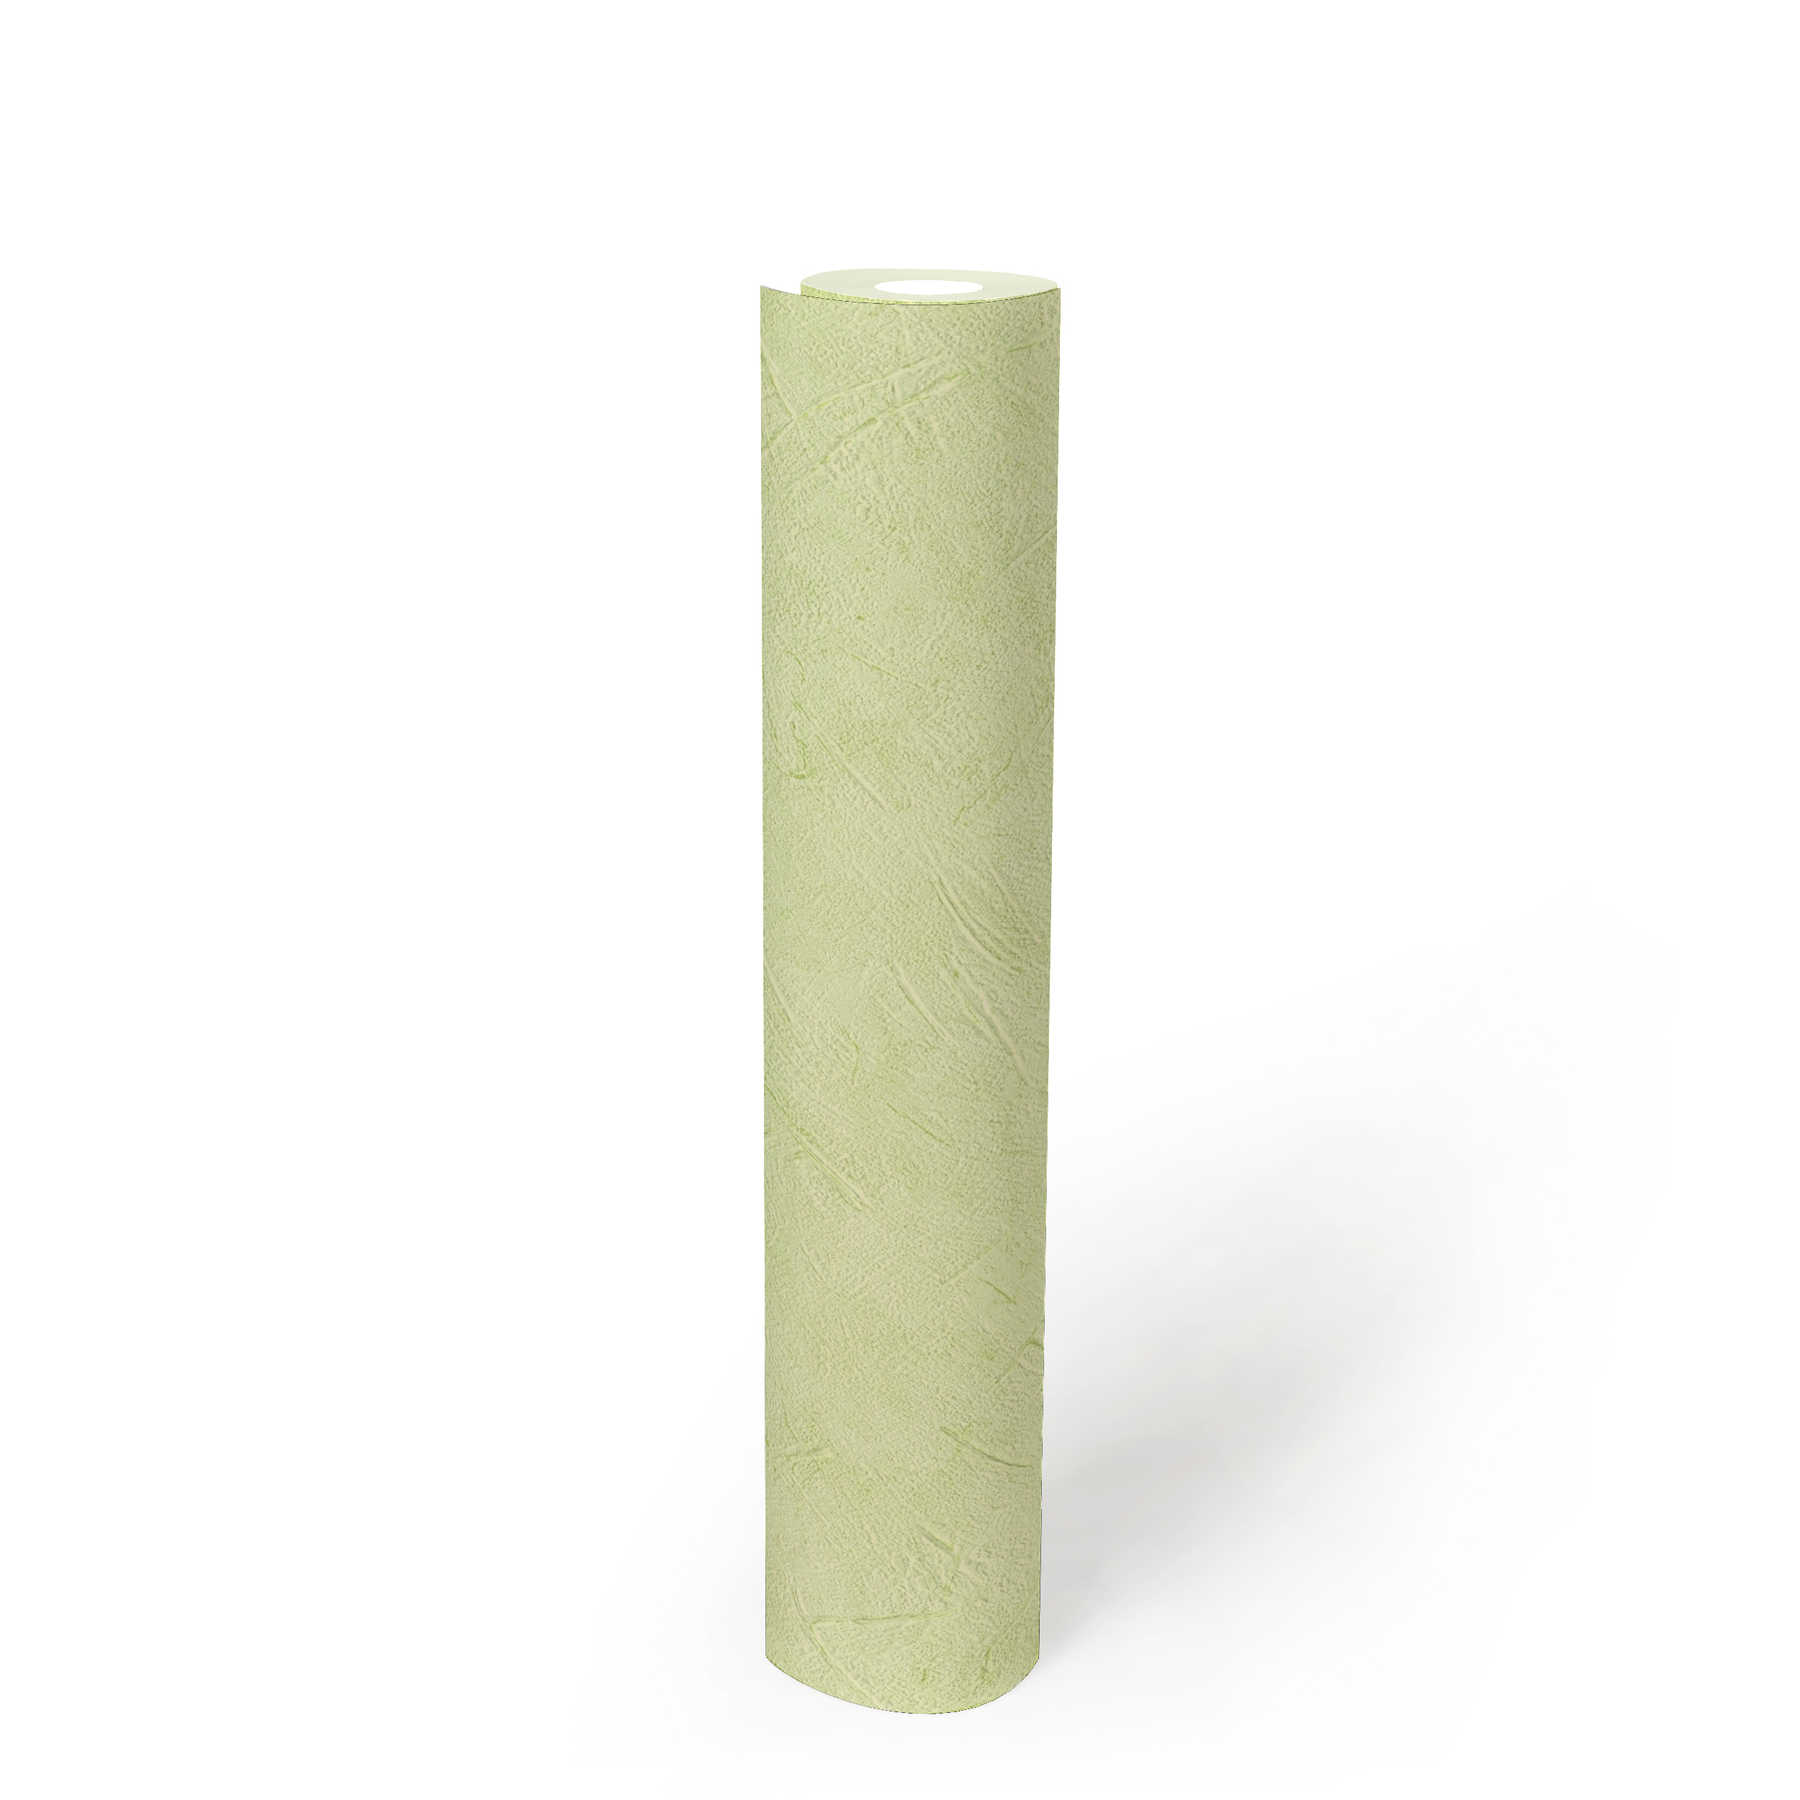             Trowel plaster paper wallpaper light green with plaster optics - green
        